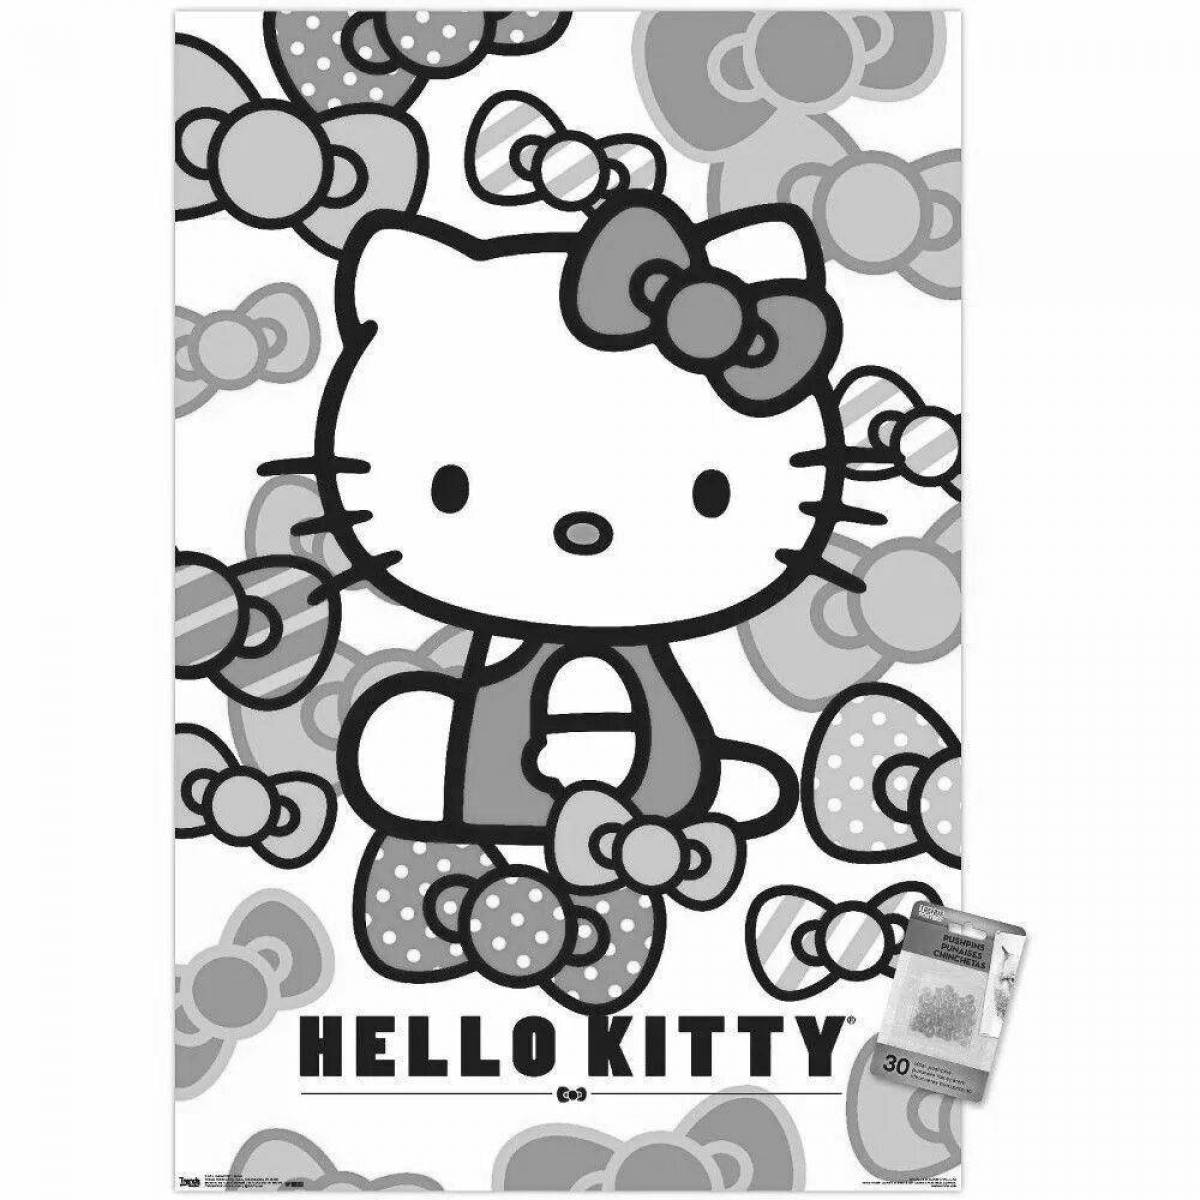 Glossy hello kitty poster